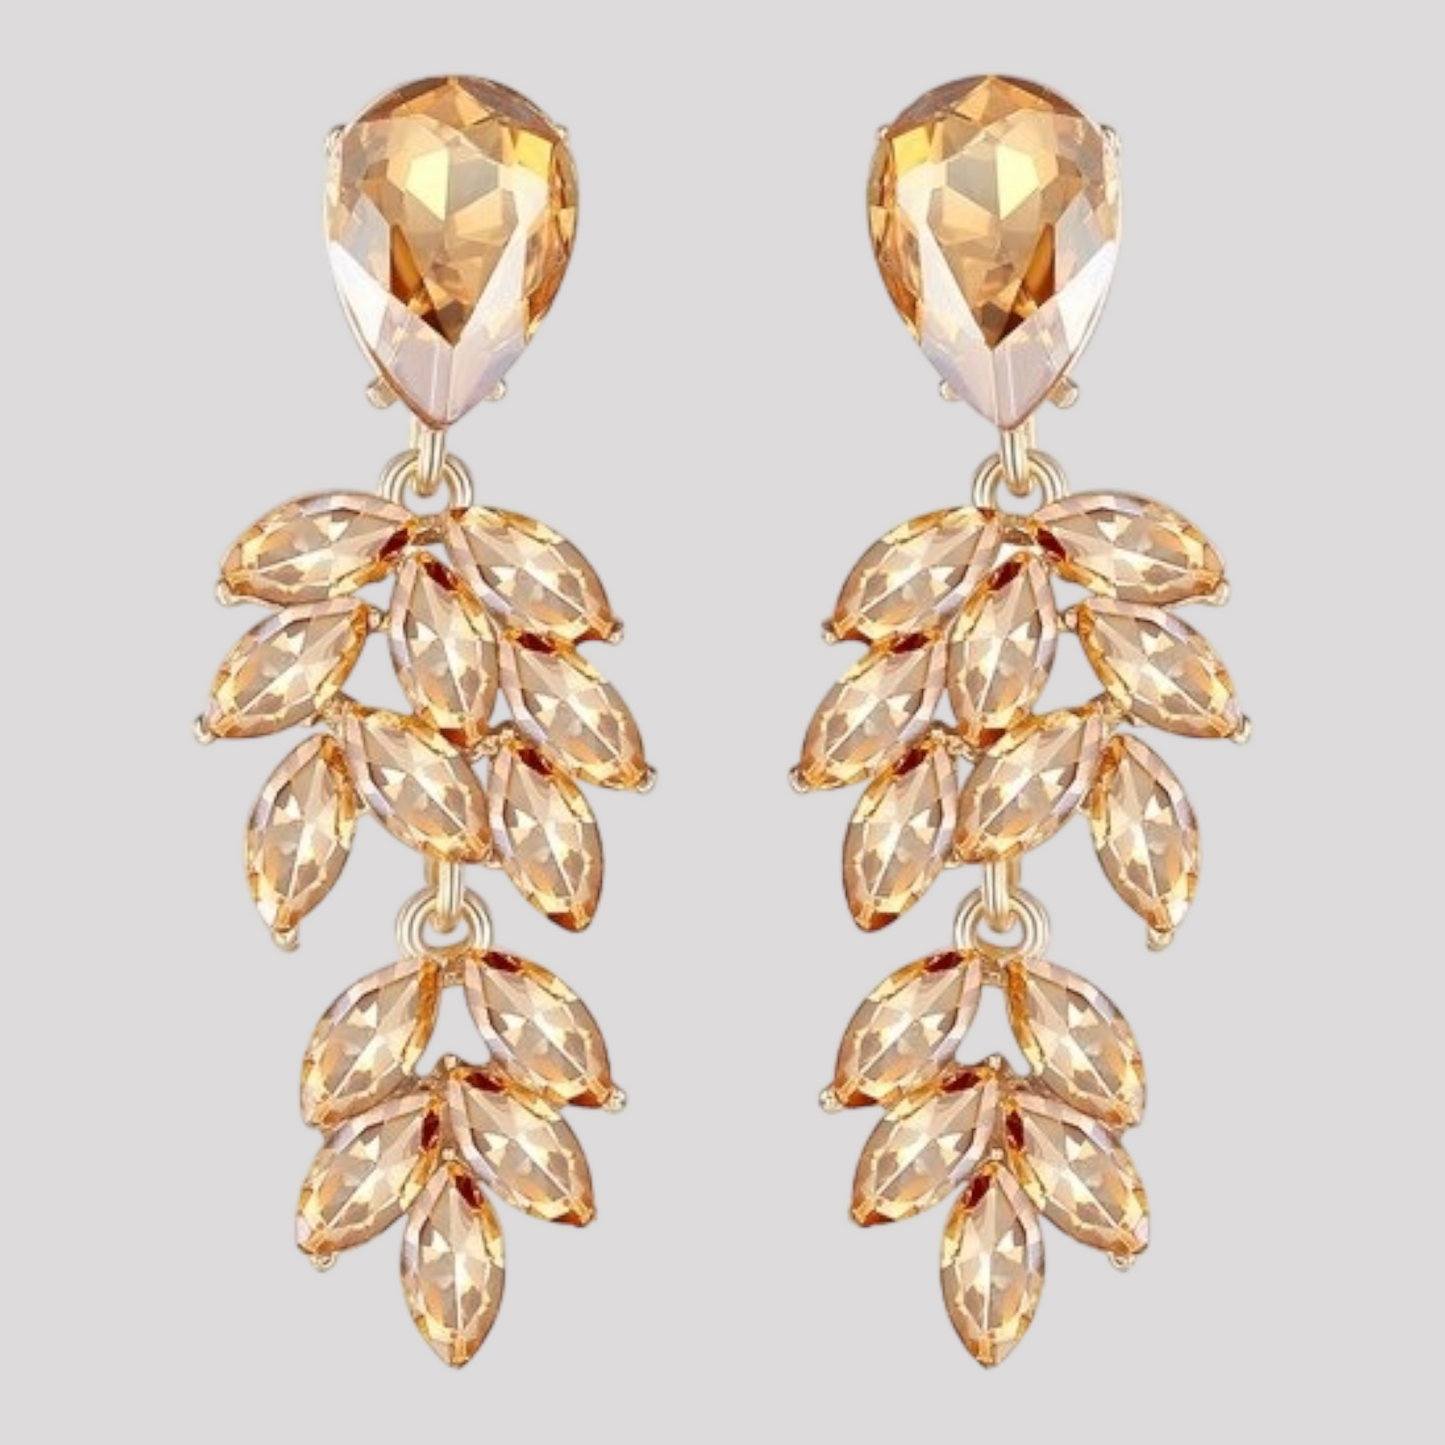 Champagne or Silver Crystal Leaf Drop Earrings